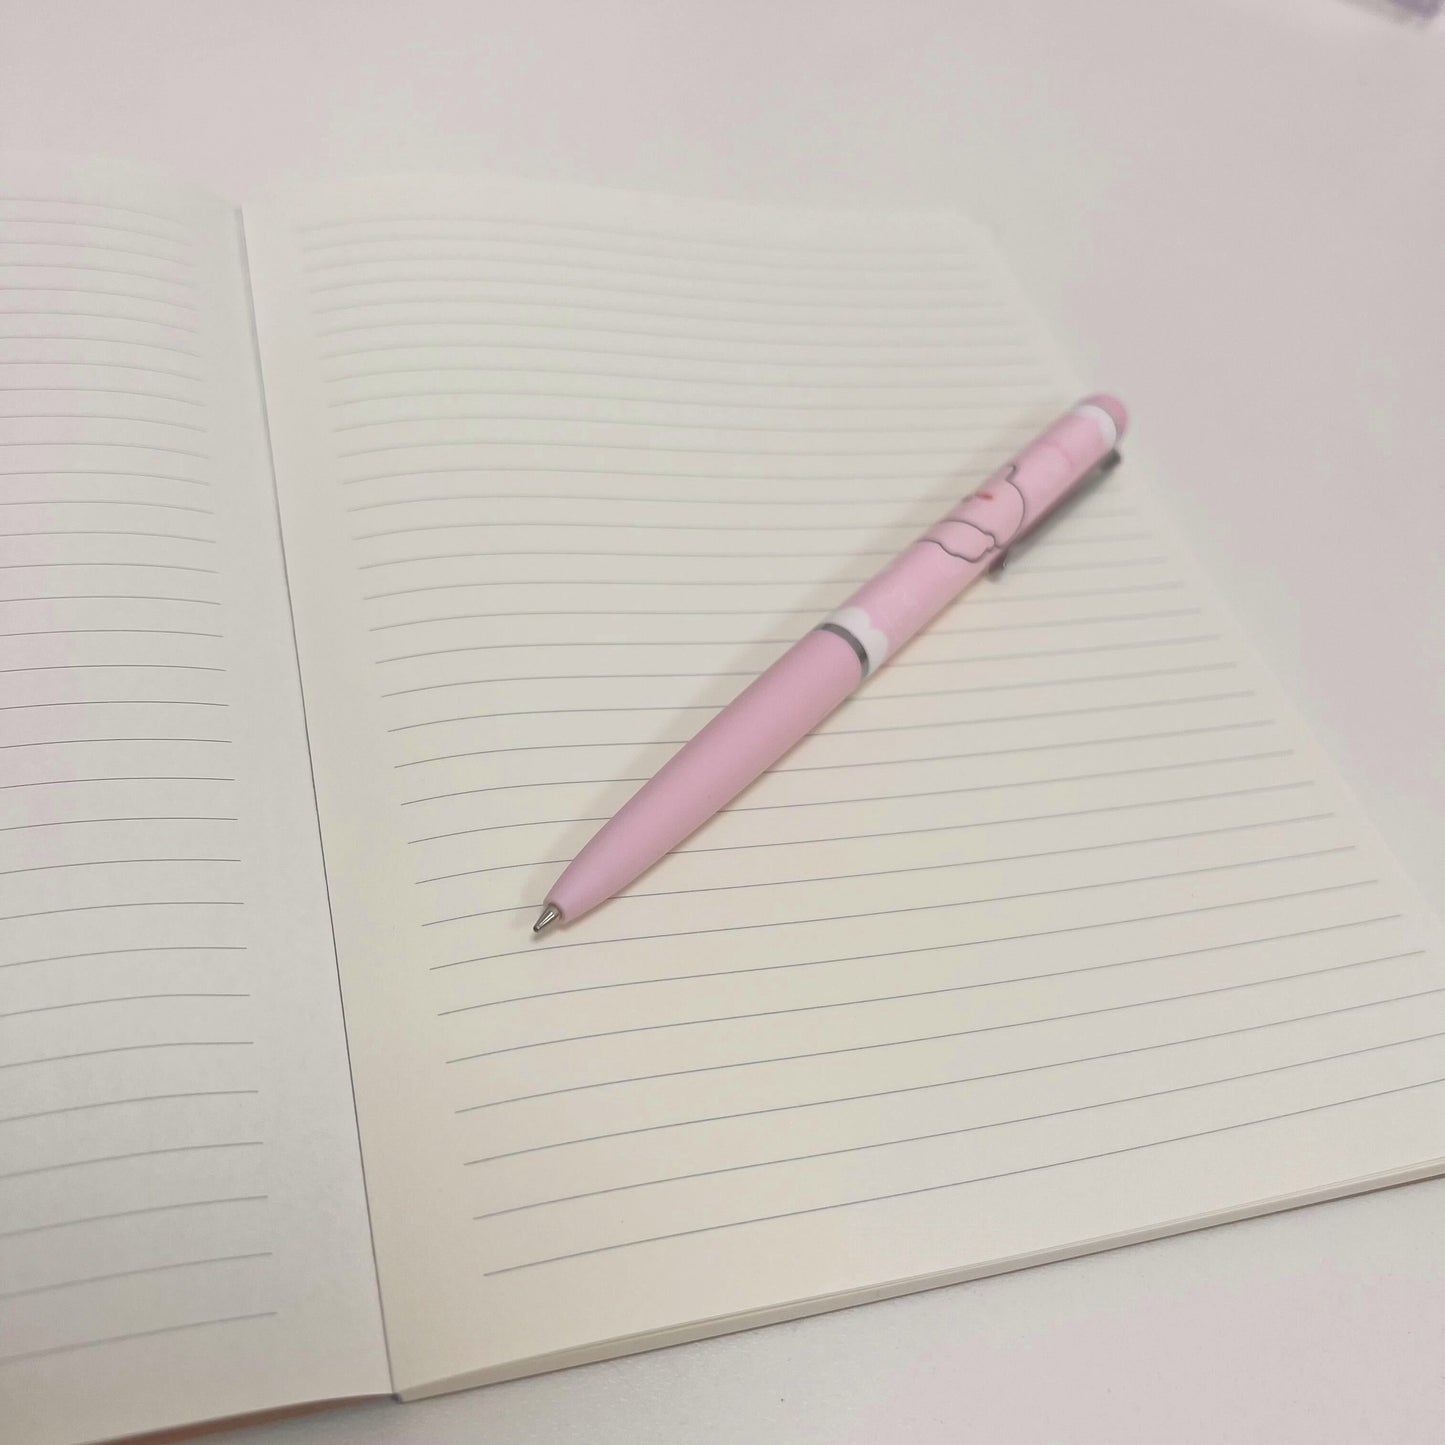 [Asamimi-chan] Pink Full Collection Ballpoint Pen (ASAMIMI BASIC 2023 September) [Shipped in mid-November]